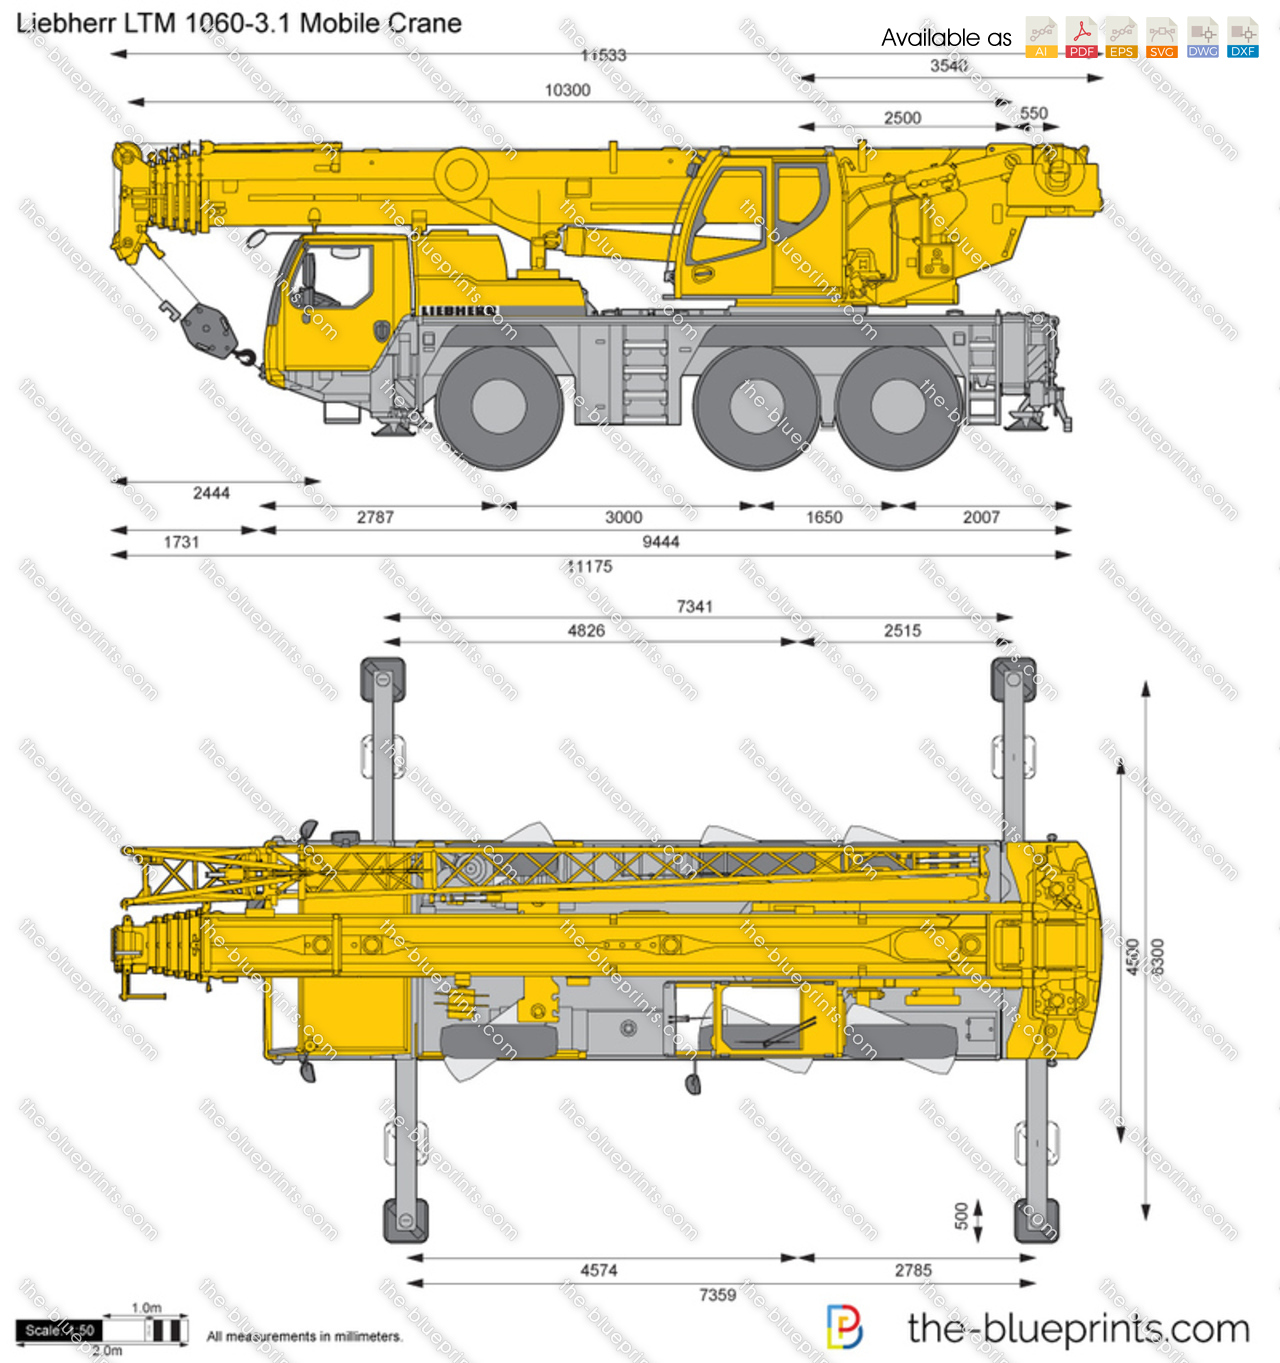 Liebherr LTM 1060-3.1 Mobile Crane